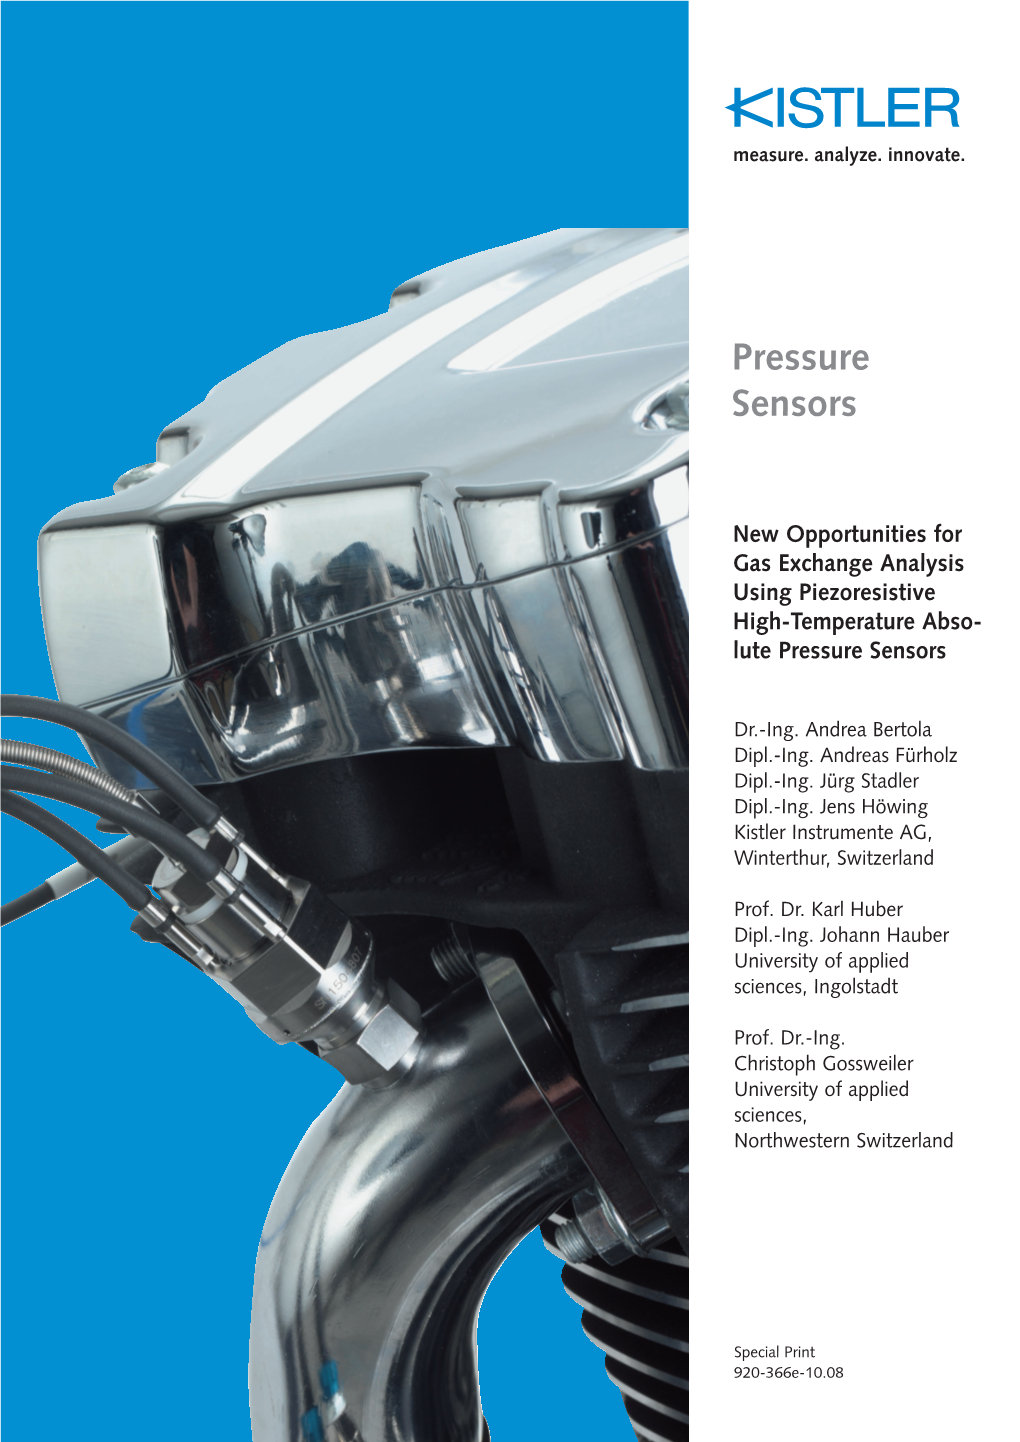 Special Print, Engines, Pressure Sensors